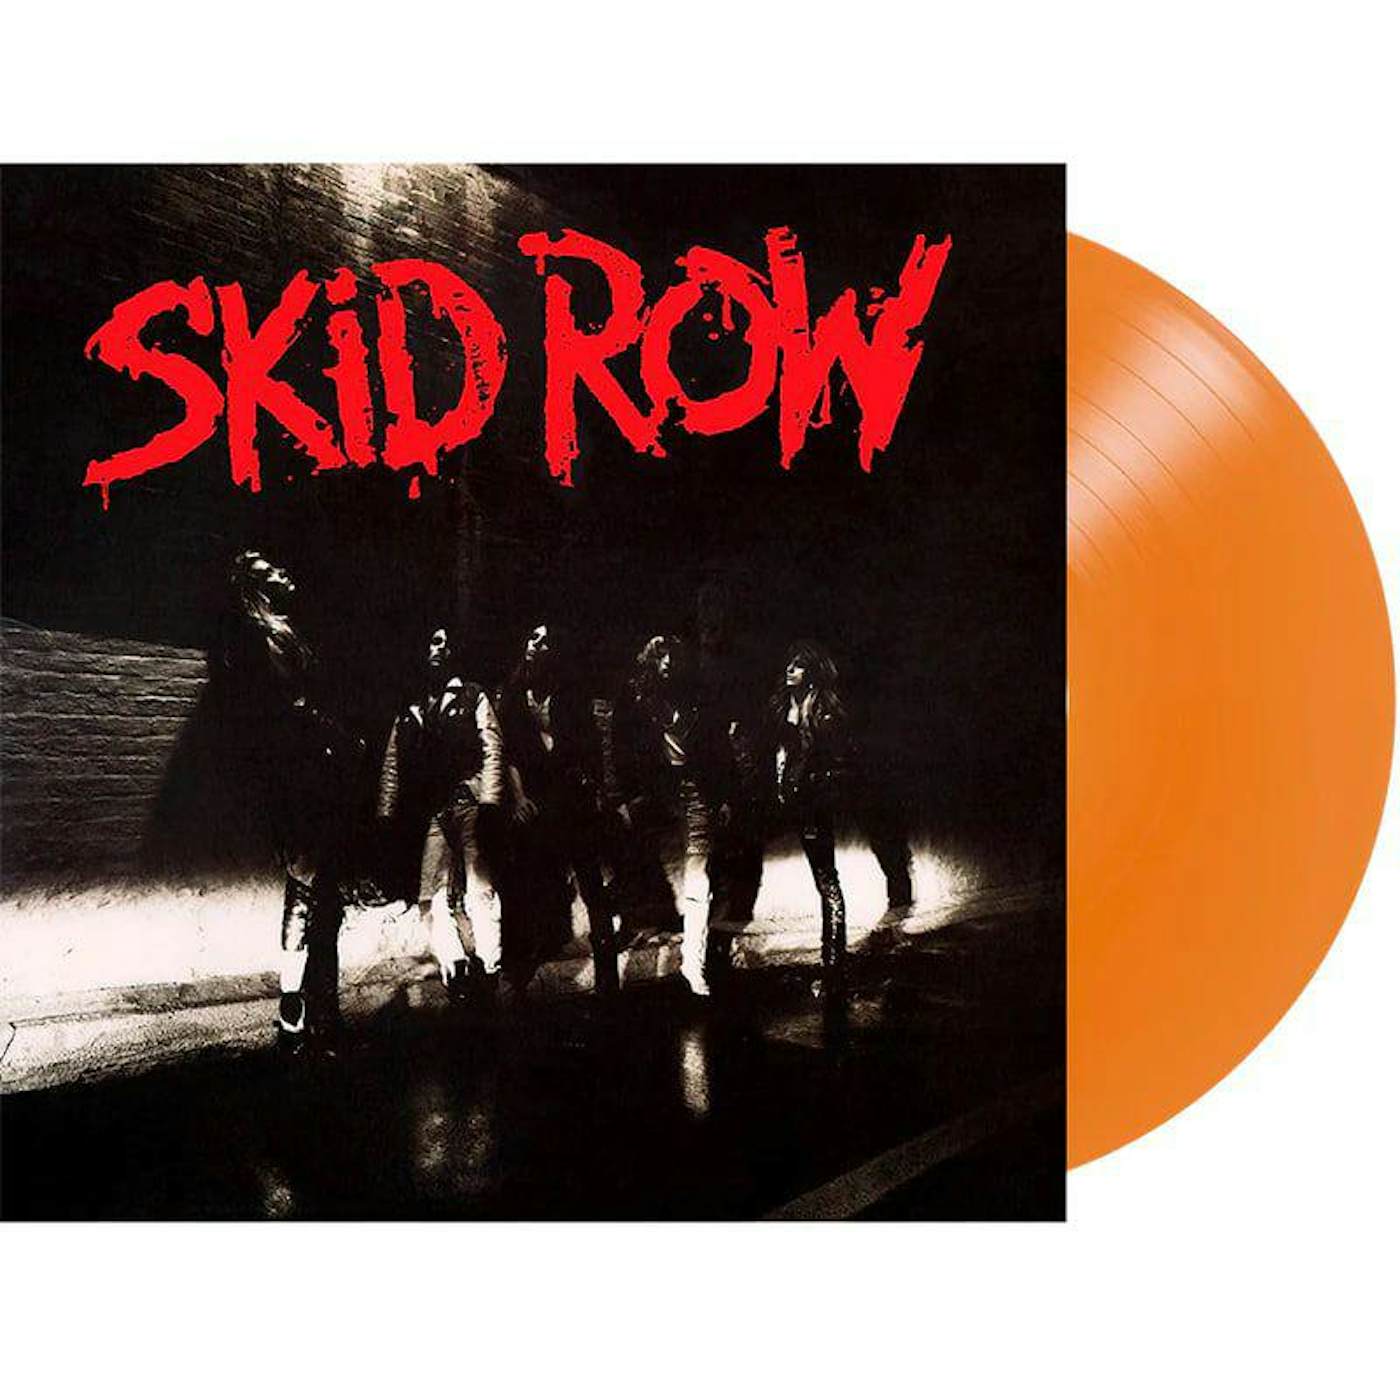  Skid Row (Orange/Limited/Anniversary Edition) Vinyl Record